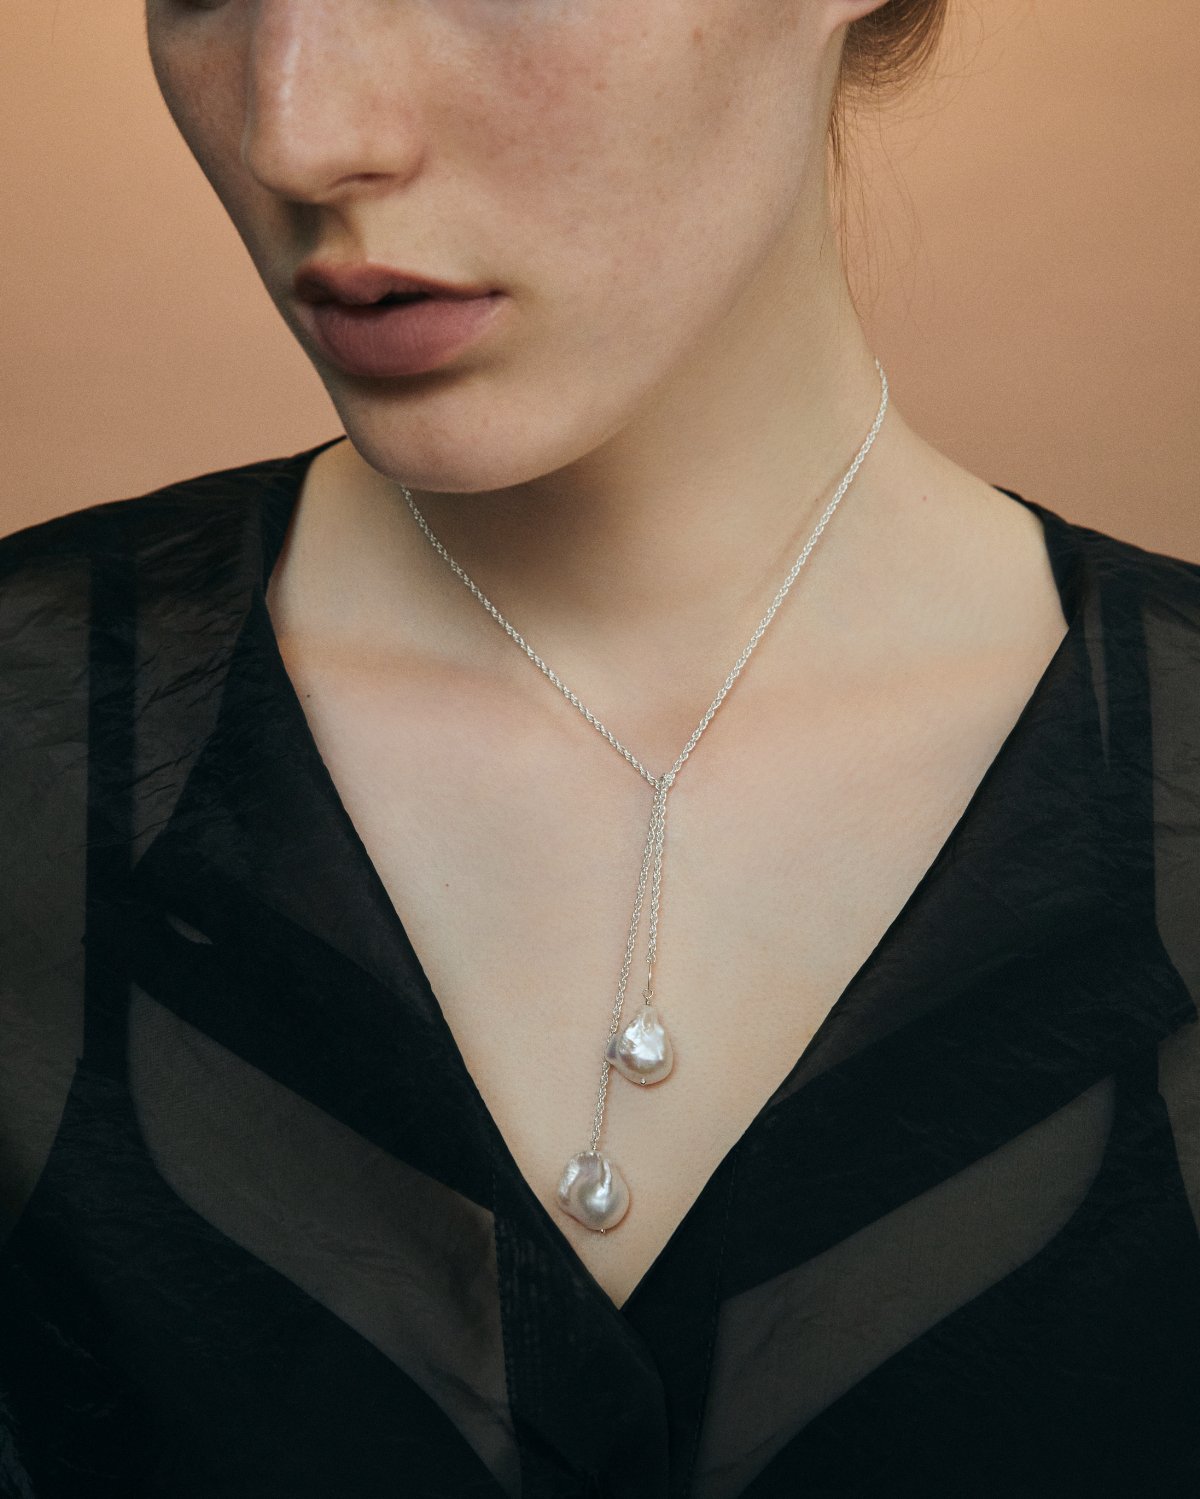   baroque pearl lariat necklace税込28,600円   